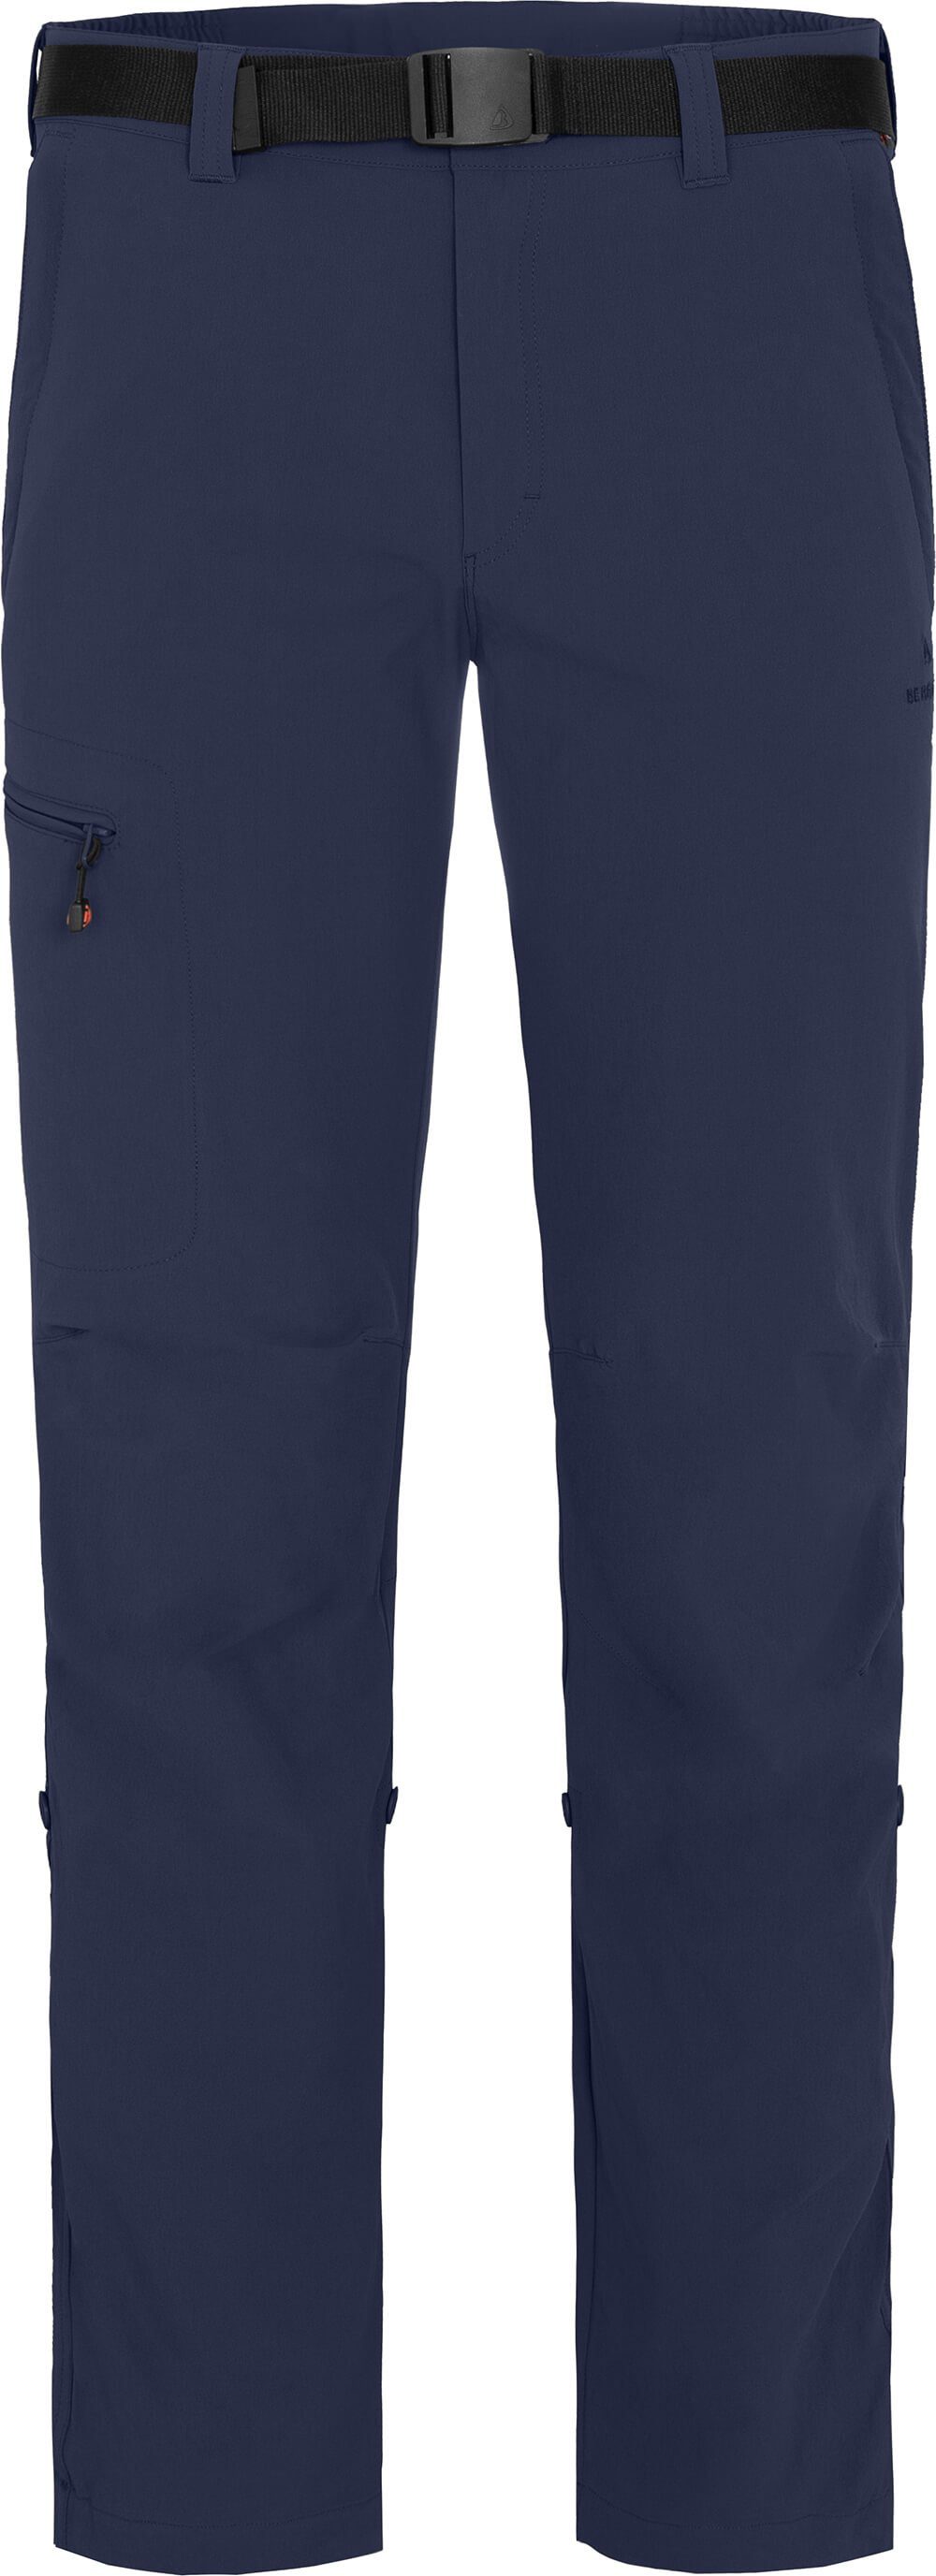 Bergson Outdoorhose REDWOOD Herren peacoat blau Kurzgrößen, pflegeleicht, vielseitig, Wanderhose